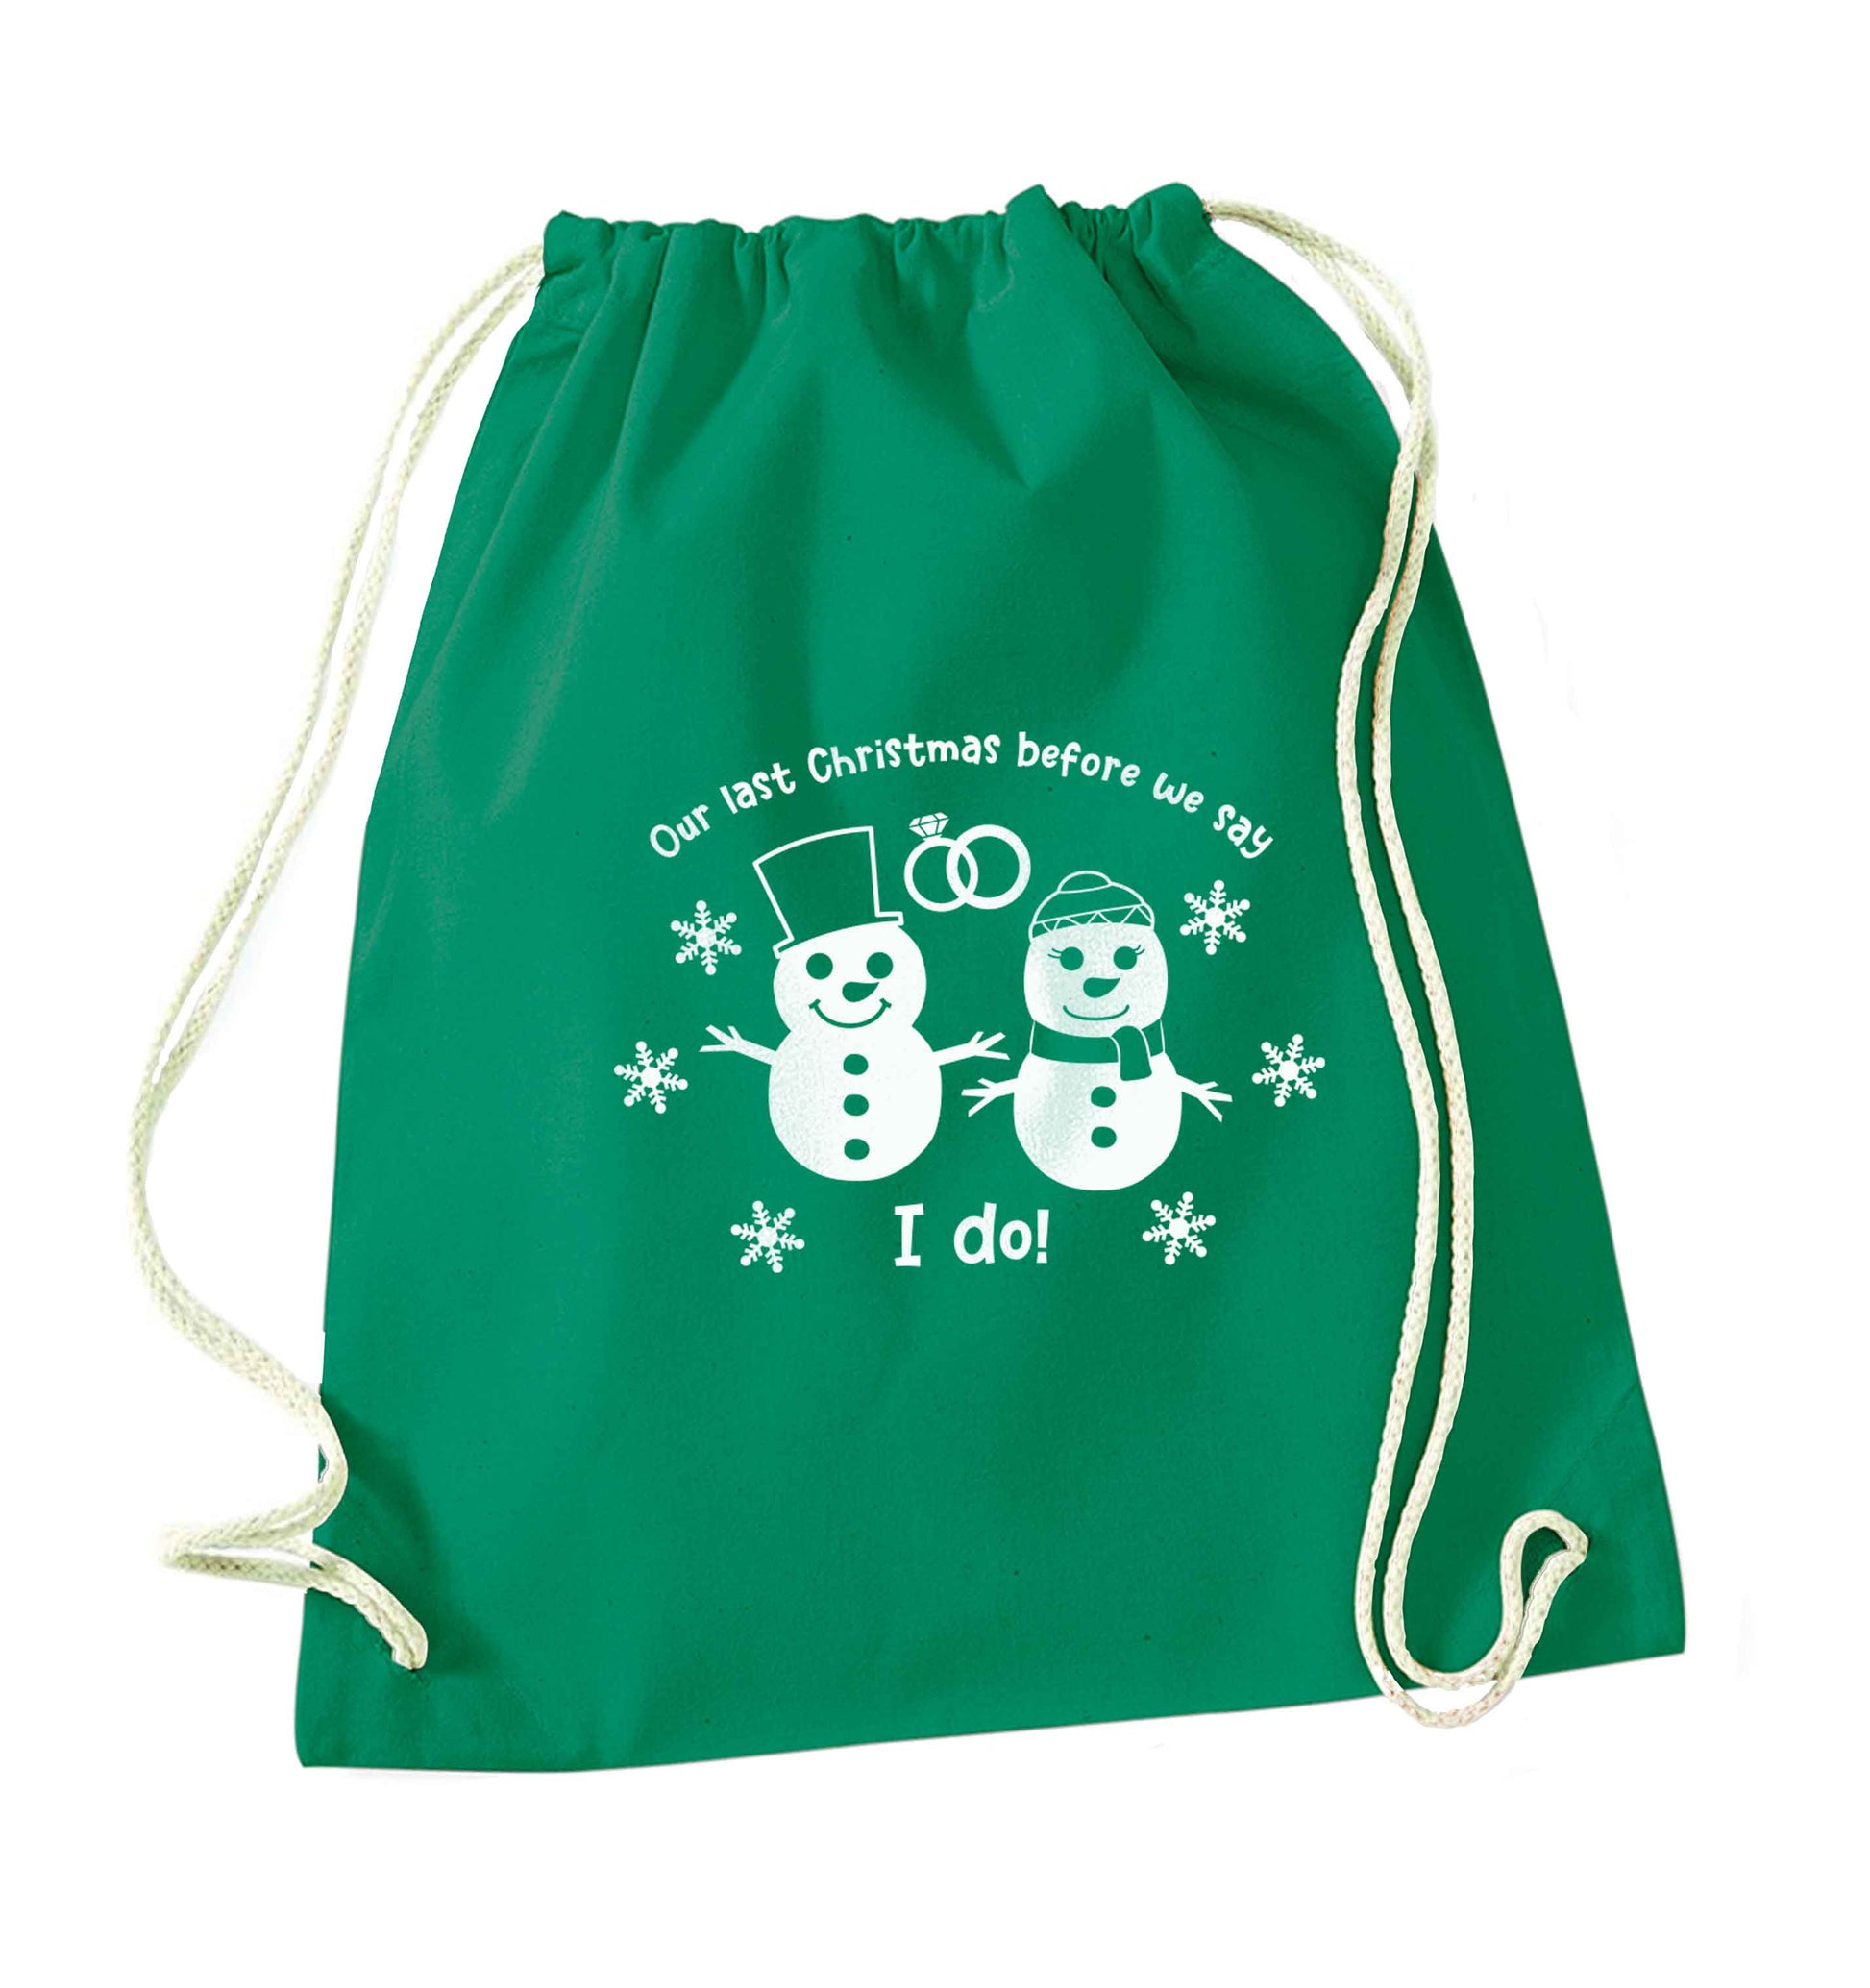 Last Christmas before we say I do green drawstring bag